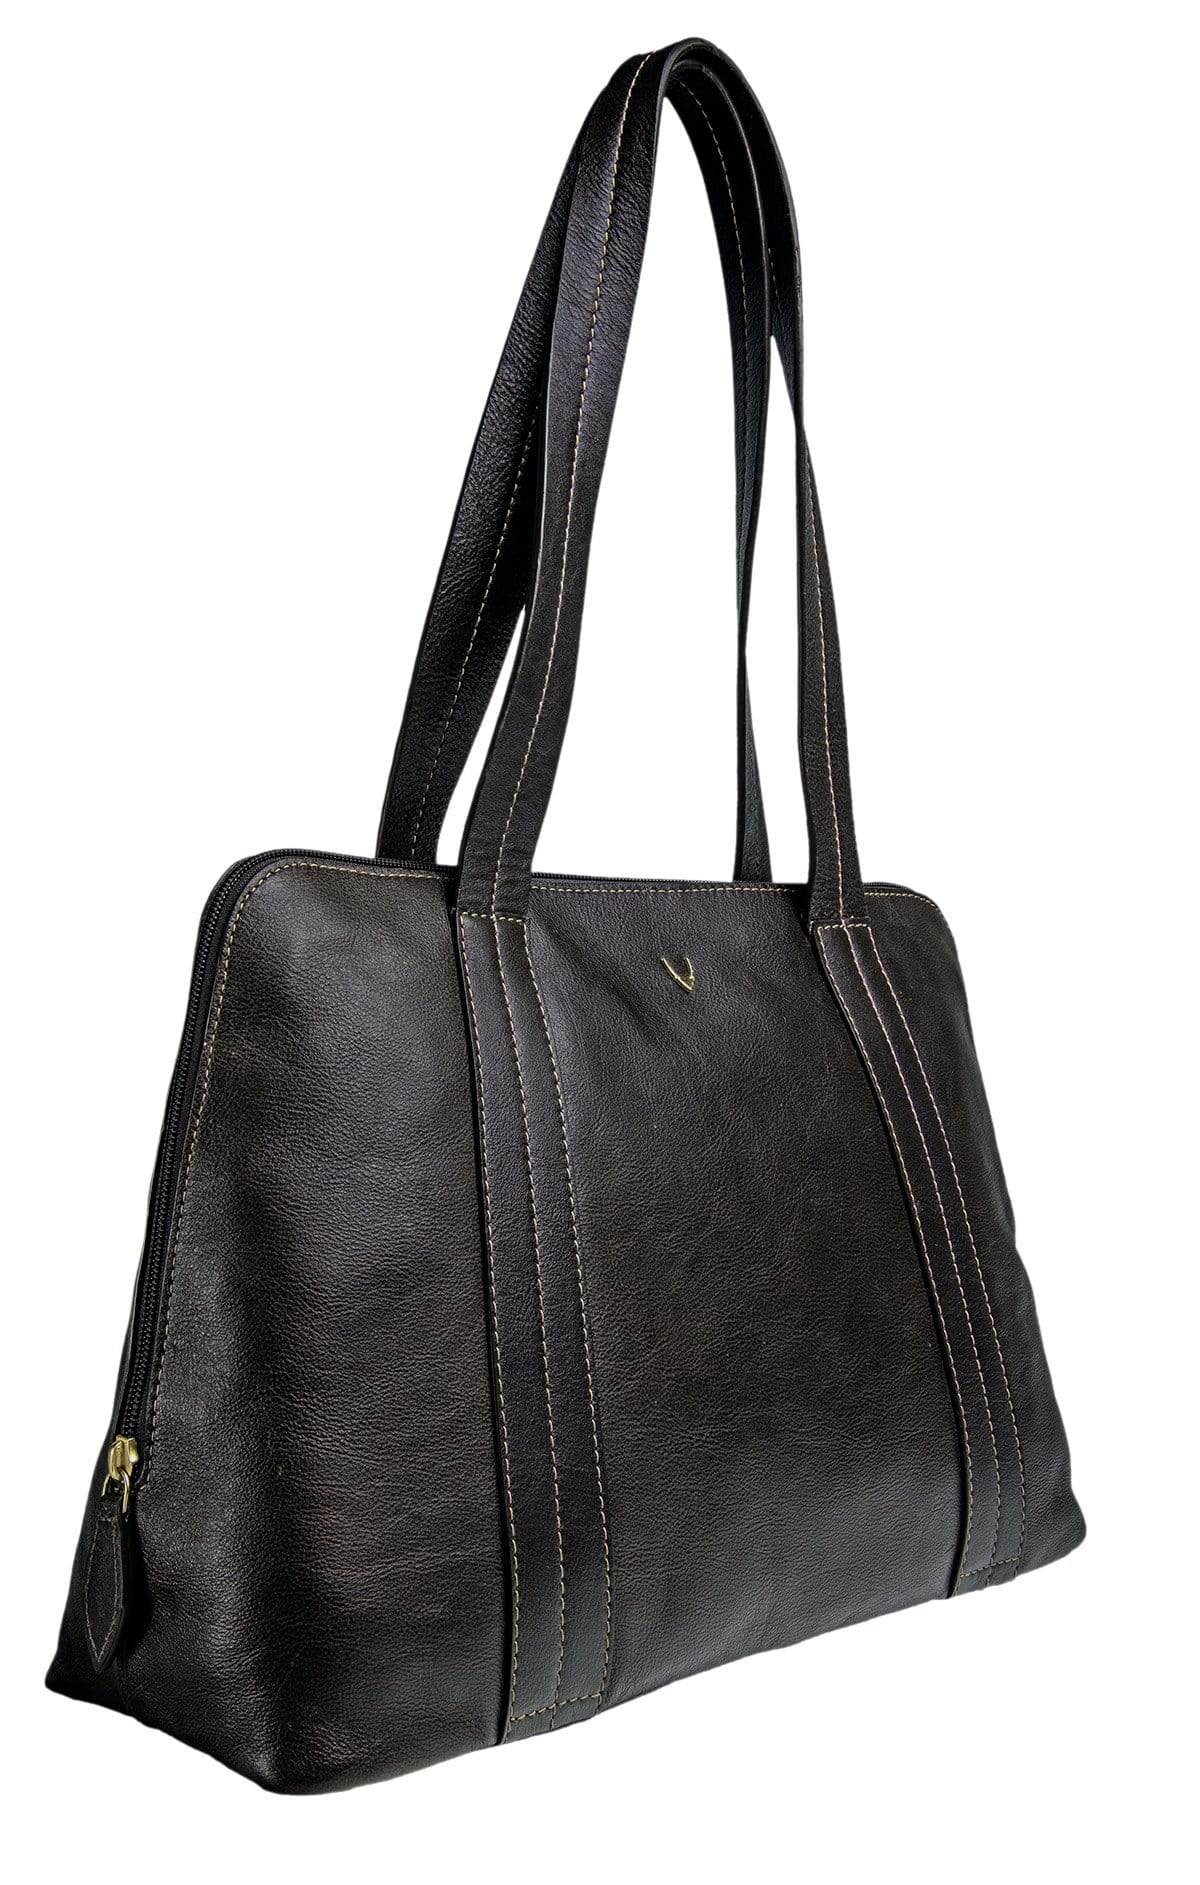 Hidesign Cerys Womens Leather Tote Bag Dark Brown